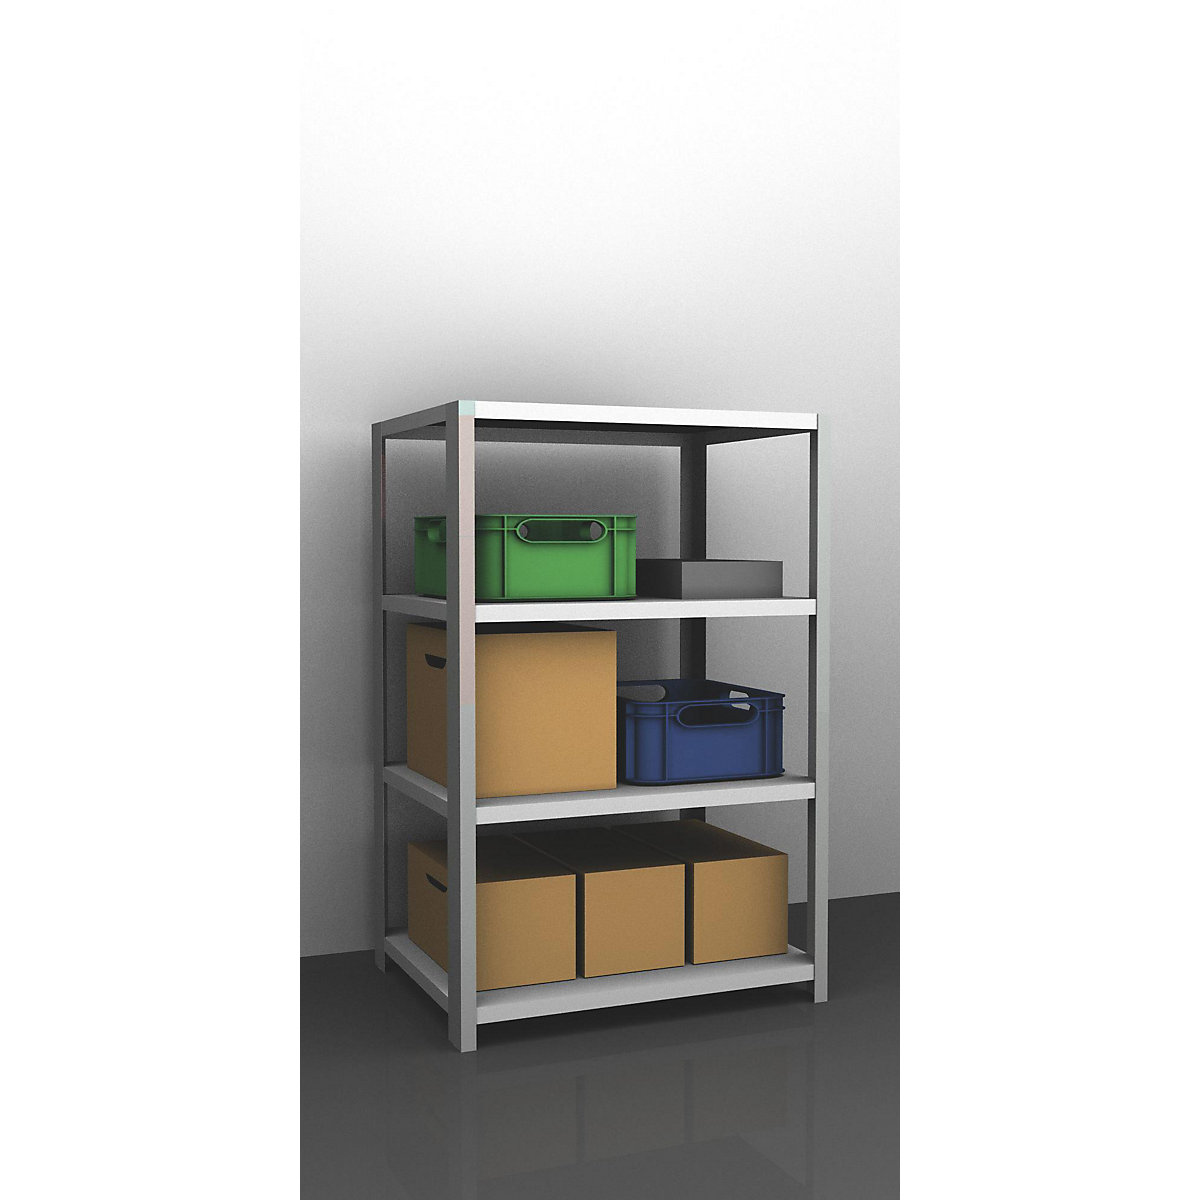 Bolt-together shelf unit, light duty, plastic coated – eurokraft pro, shelf unit height 1500 mm, shelf width 1000 mm, depth 800 mm, standard shelf unit-6